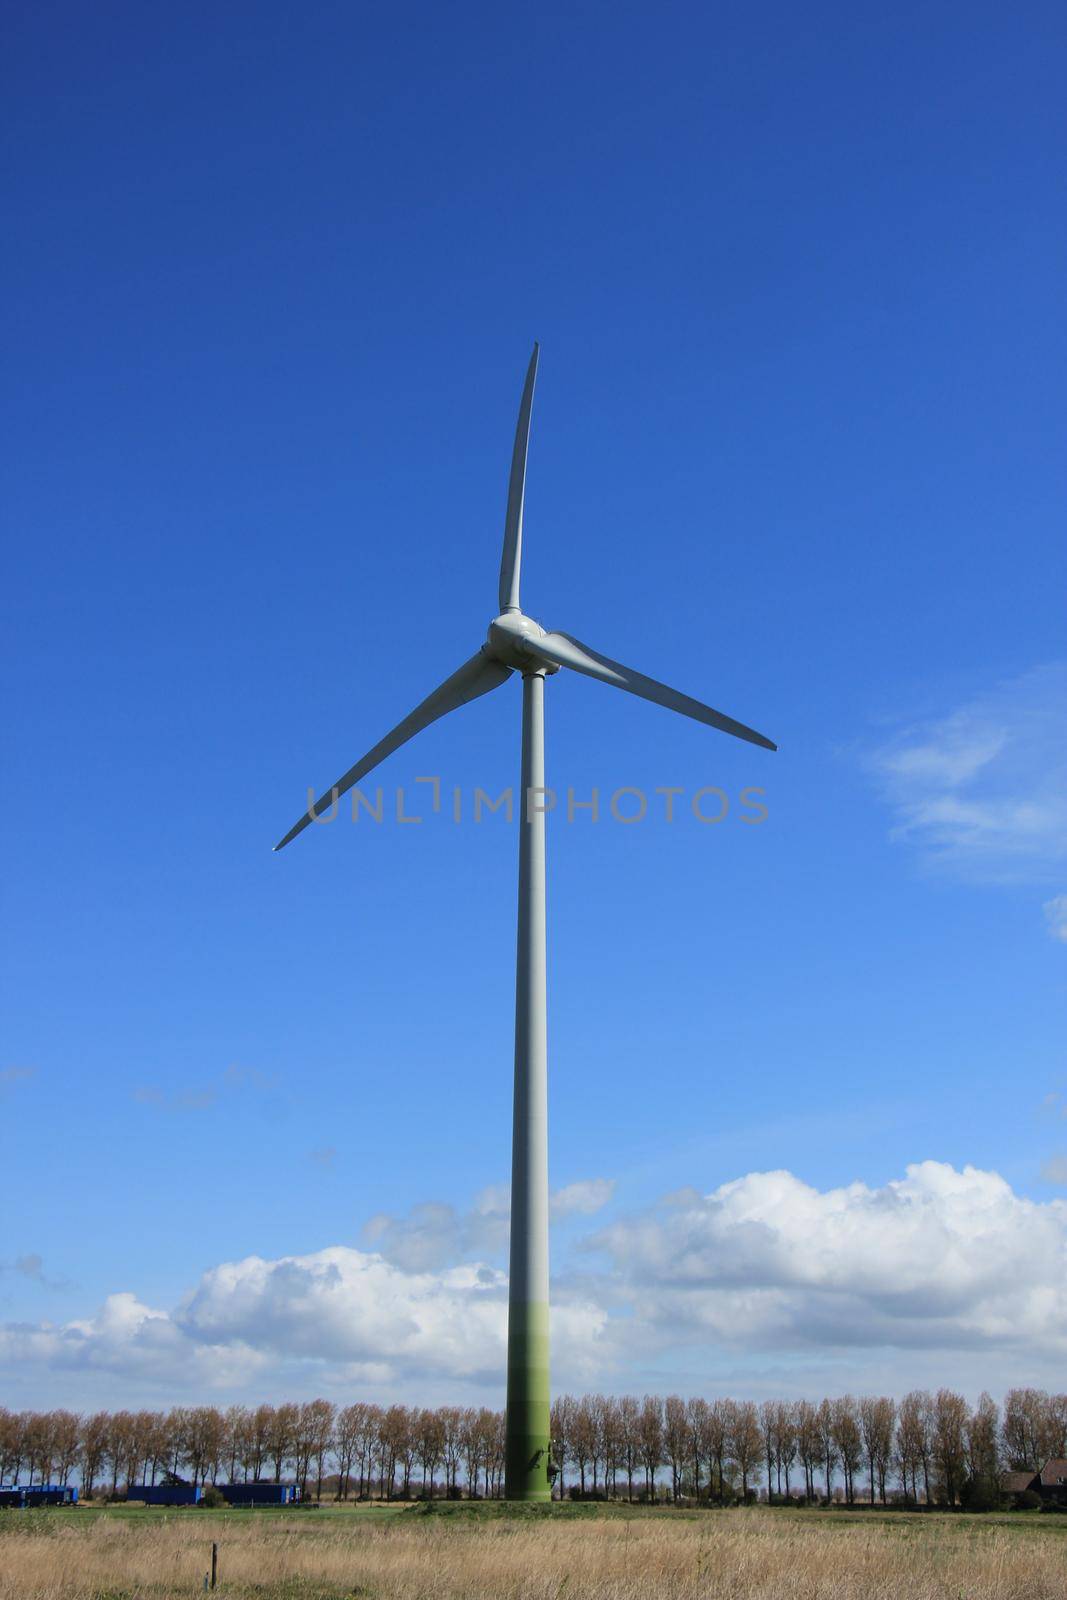 A Wind turbine generating electricity in a blue sky by studioportosabbia